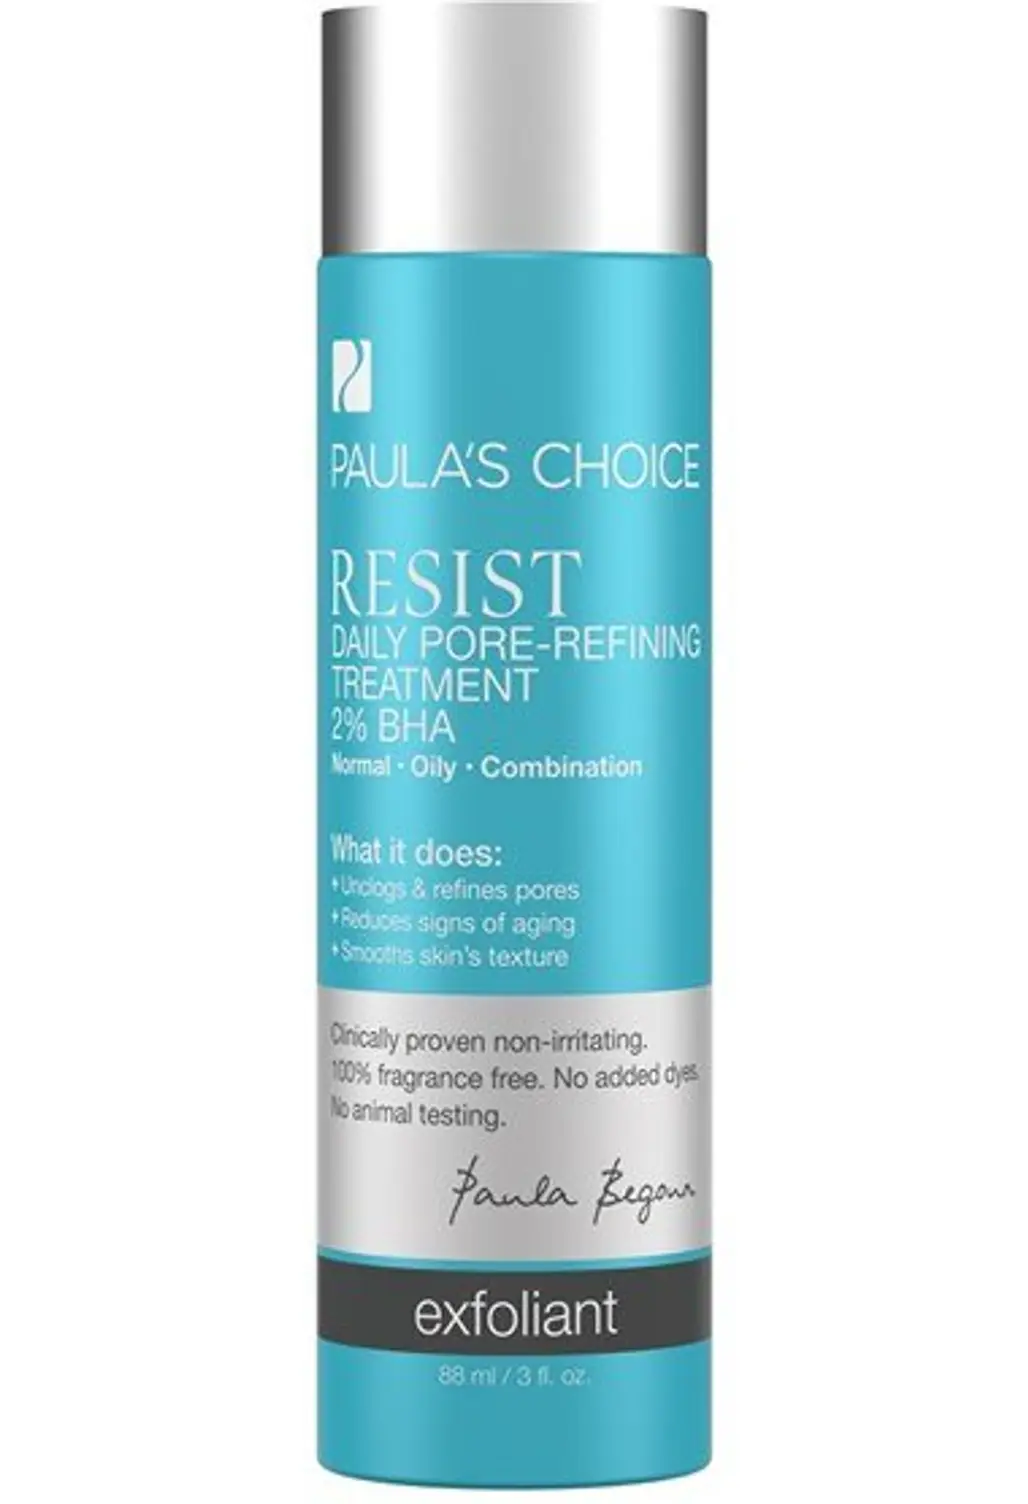 Paula's Choice 'resist' Daily Pore-refining Treatment